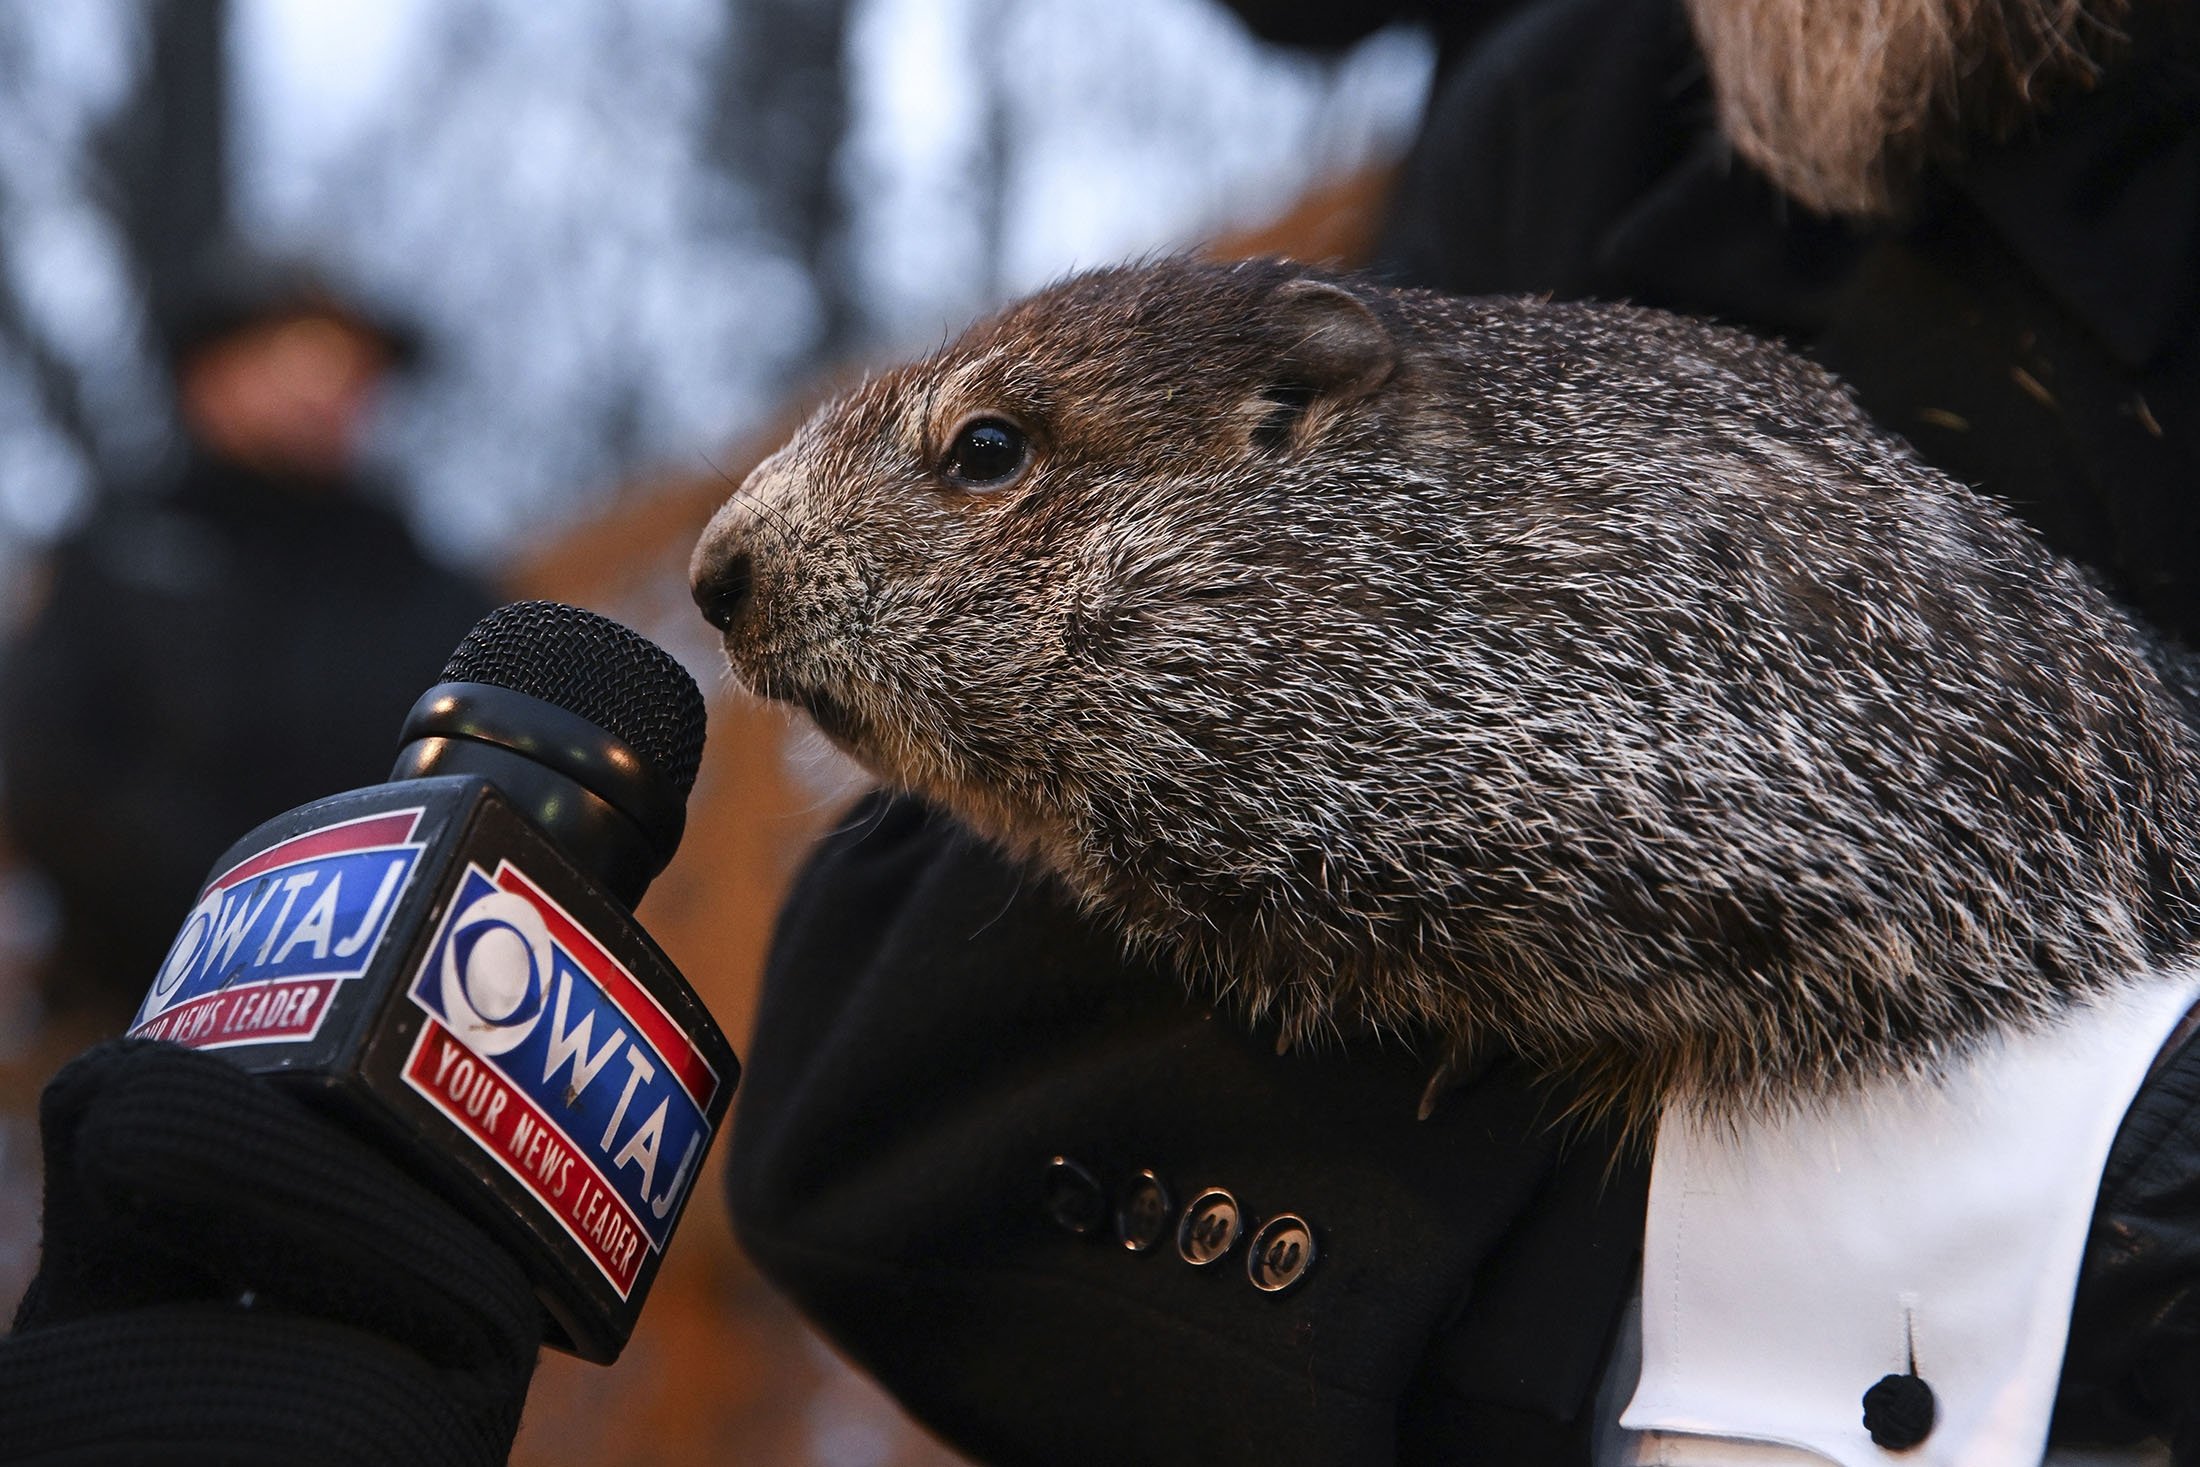 Groundhog Club handler A.J. Dereume holds Punxsutawney Phil, the weather prognosticating groundhog, during the 136th celebration of Groundhog Day on Gobbler's Knob in Punxsutawney, Pennsylvania, U.S., Feb. 2, 2022. (AP Photo)